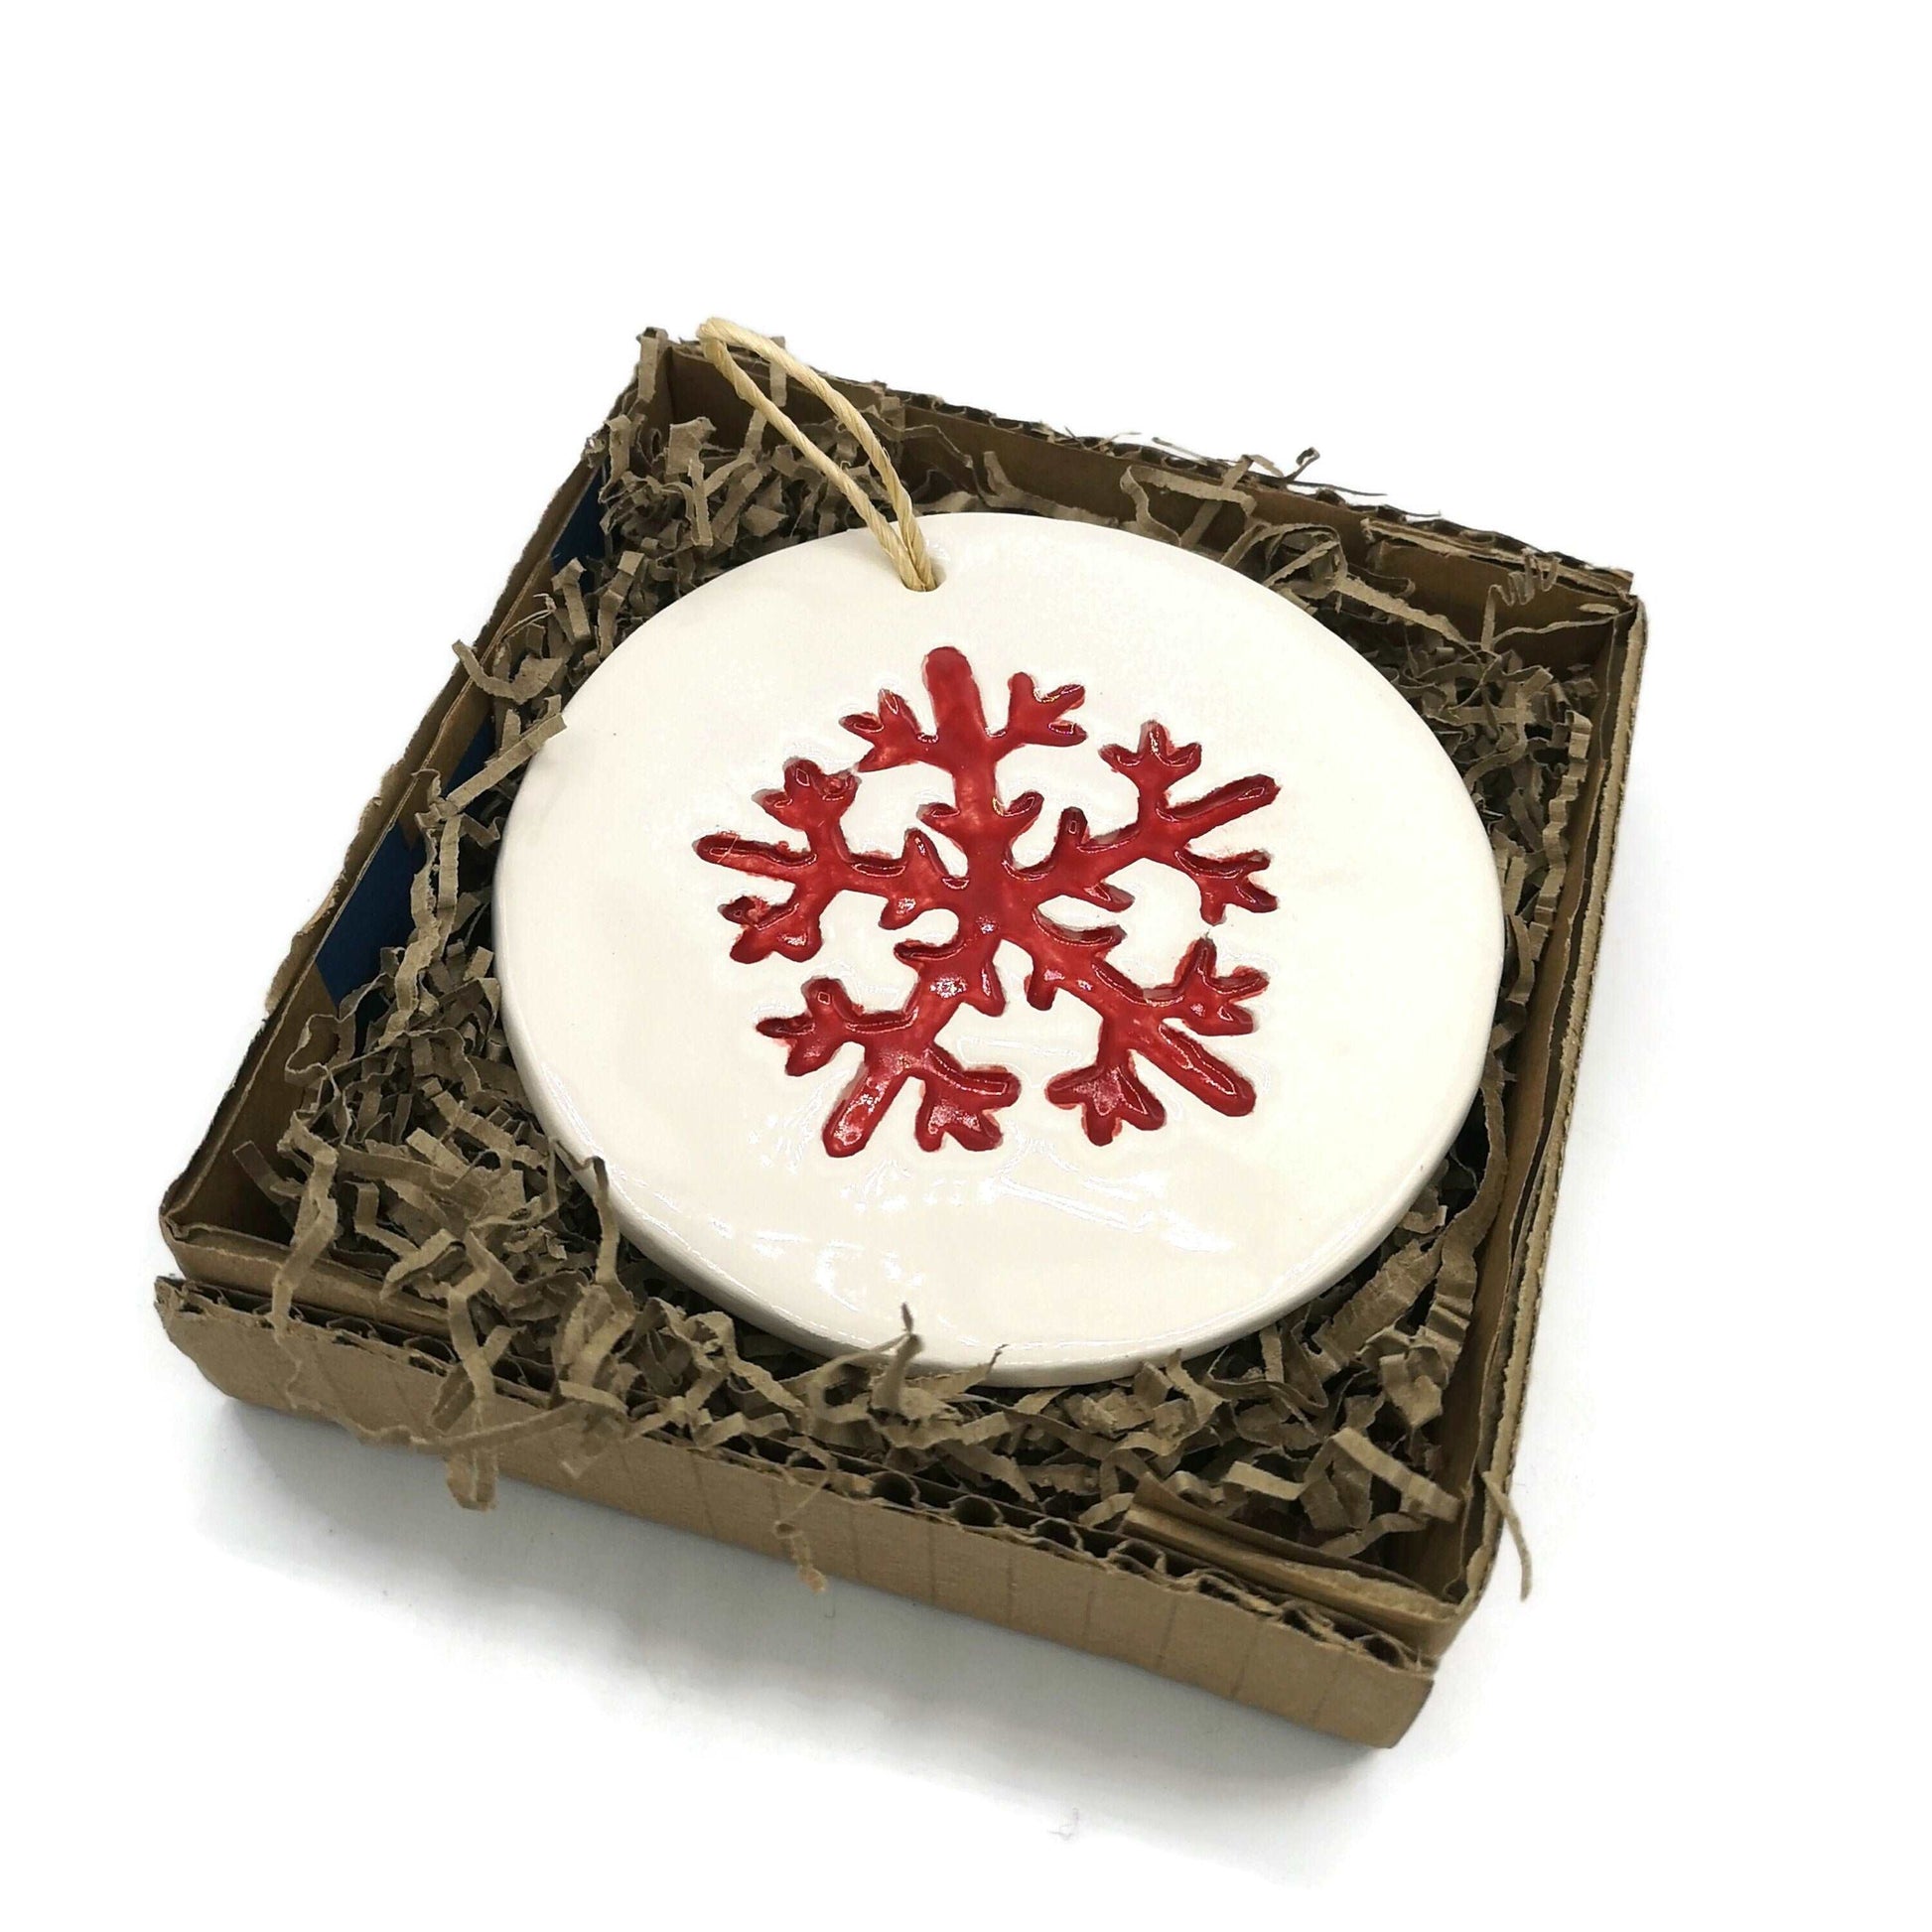 1Pc Red Snowflake Ornament, Handmade Ceramic Wall Hanging Nordic Winter Decor, Chrismas Tree Ornament